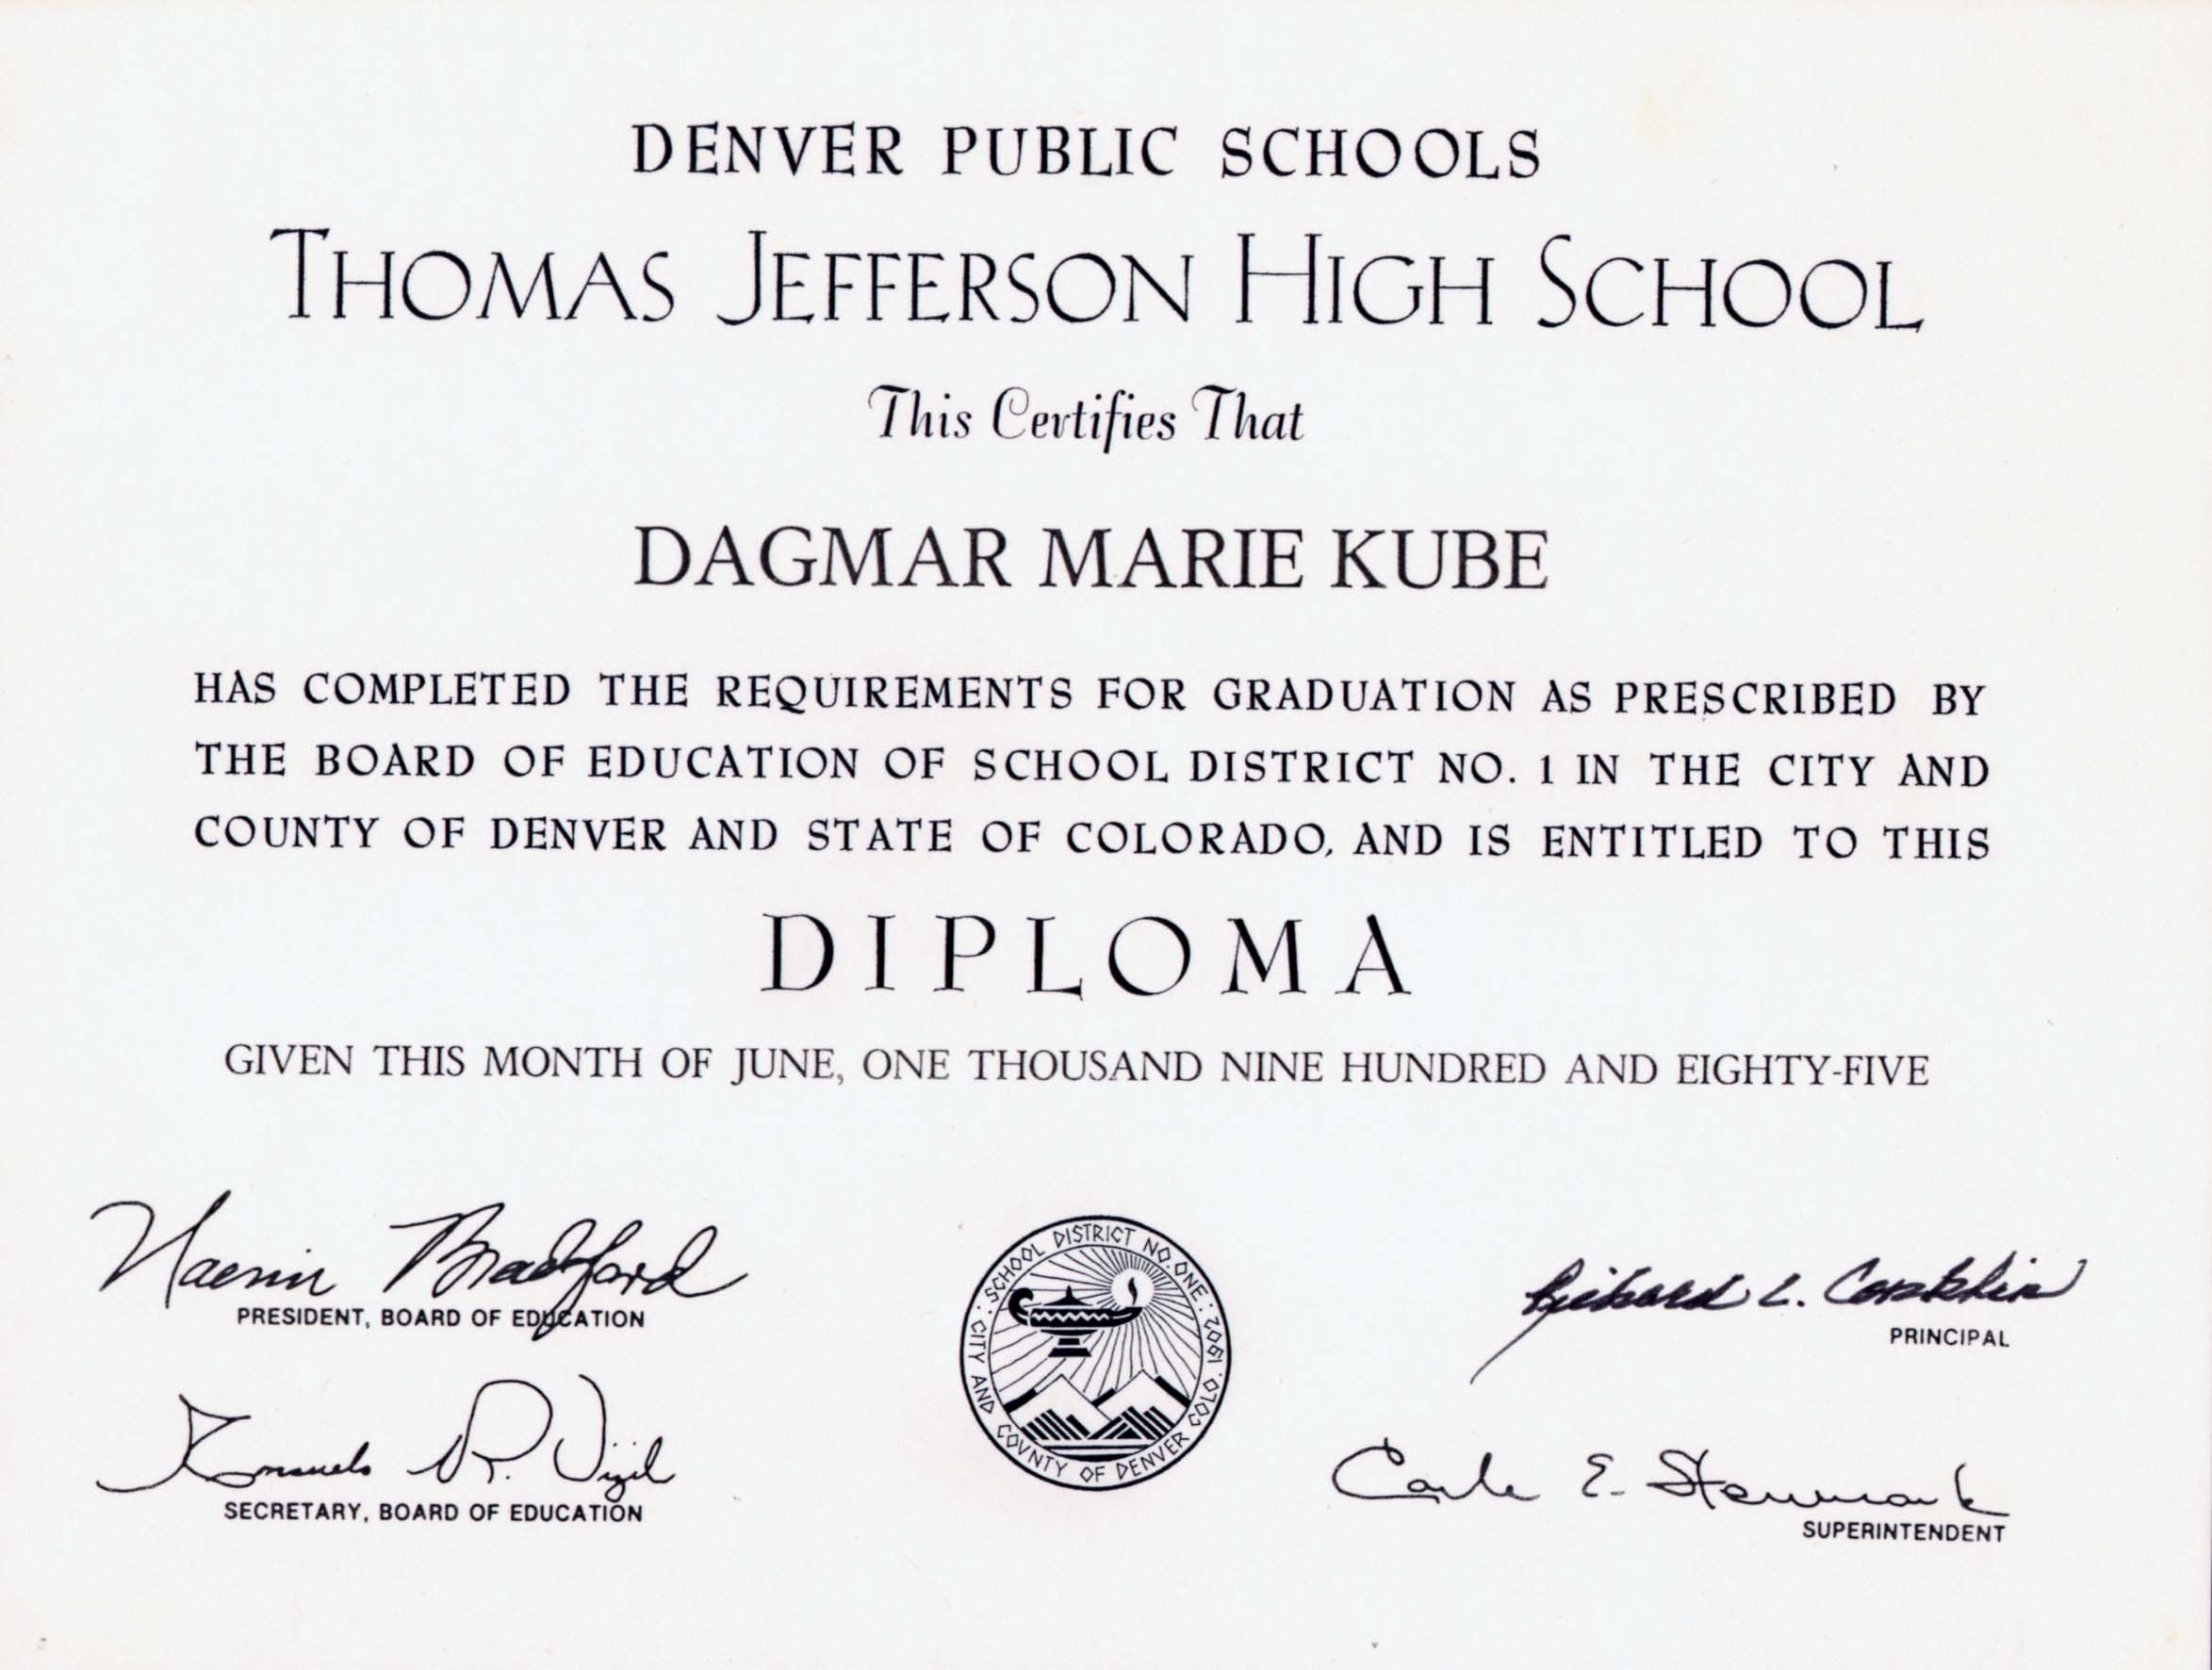 High School Diploma rotated Medium.JPG